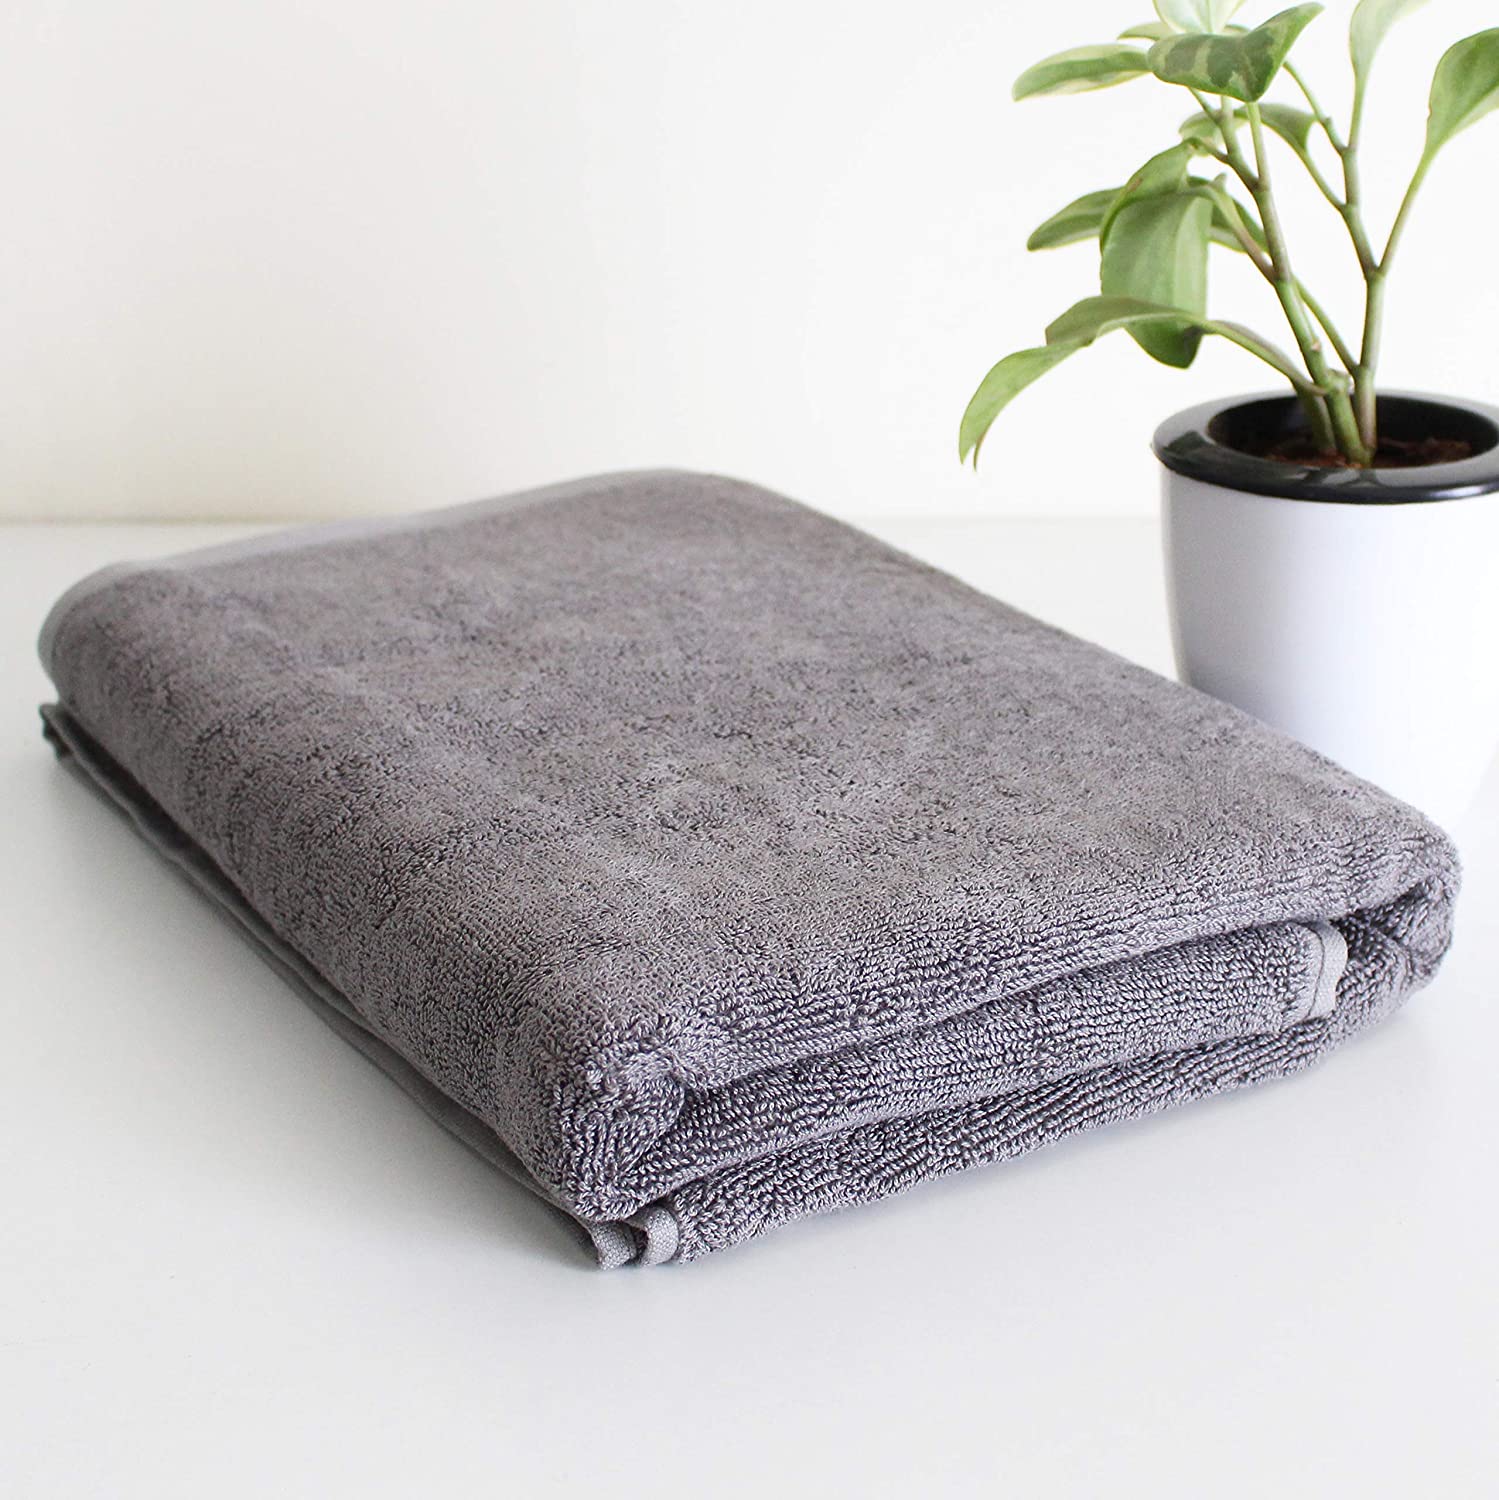 Bamboo Bath & Swim Towel, Ultra Soft, Super Absorbent, Antibacterial, 600 GSM, 55 inch x 27 inch, 1 Pcs.